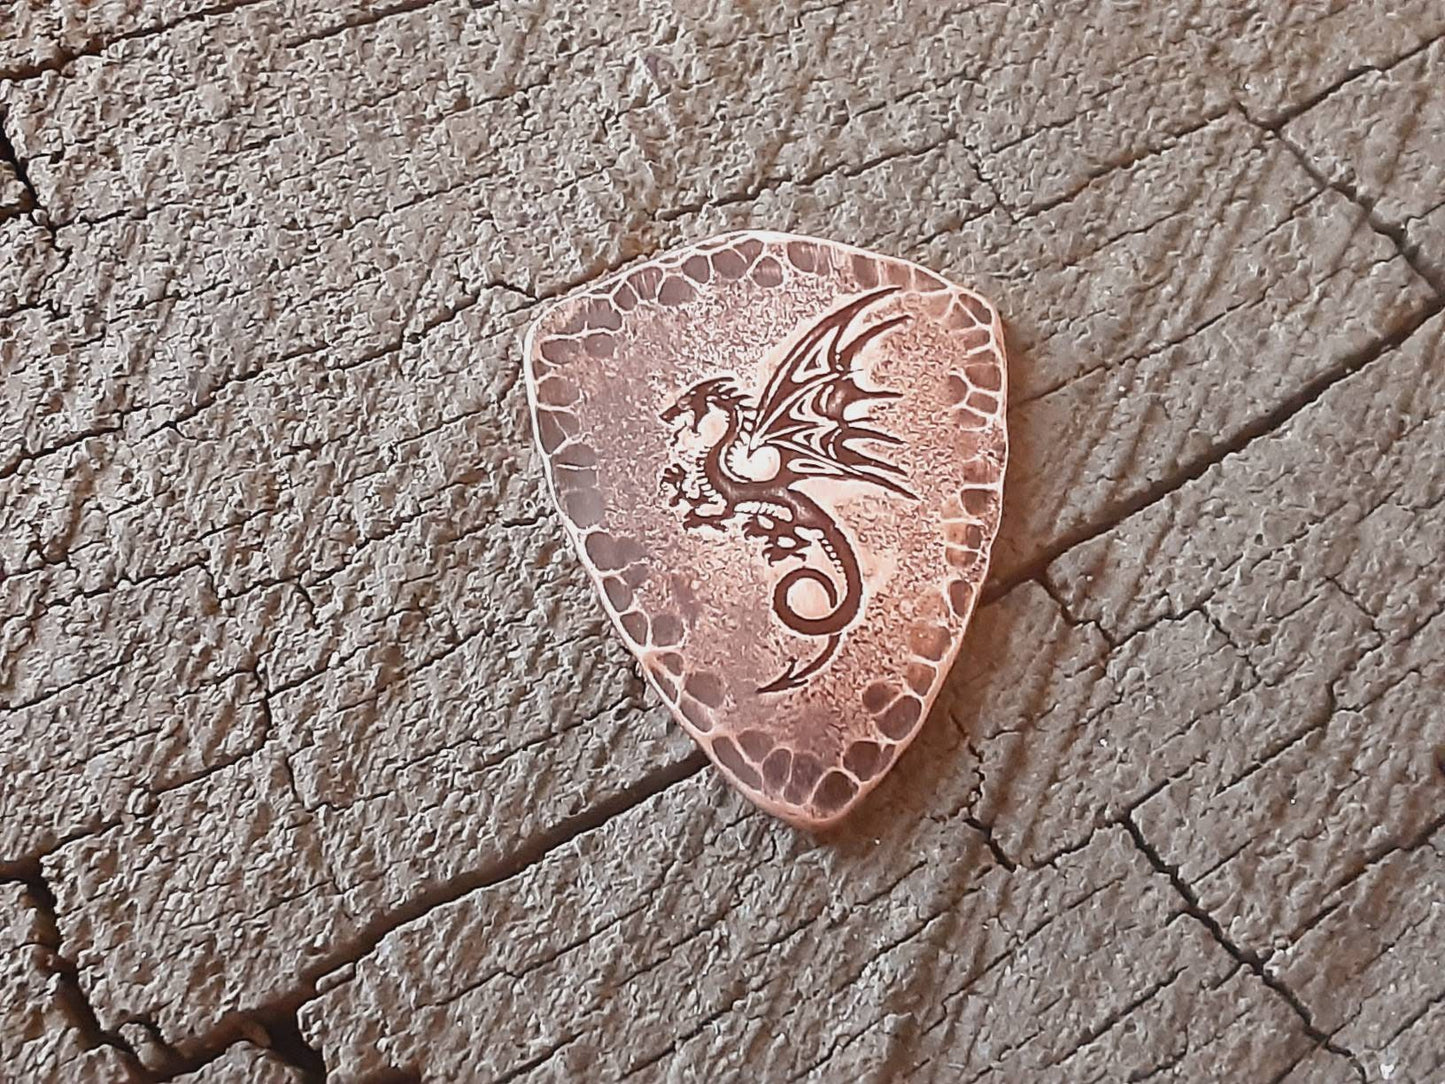 Shield style guitar pick in copper with a dragon design